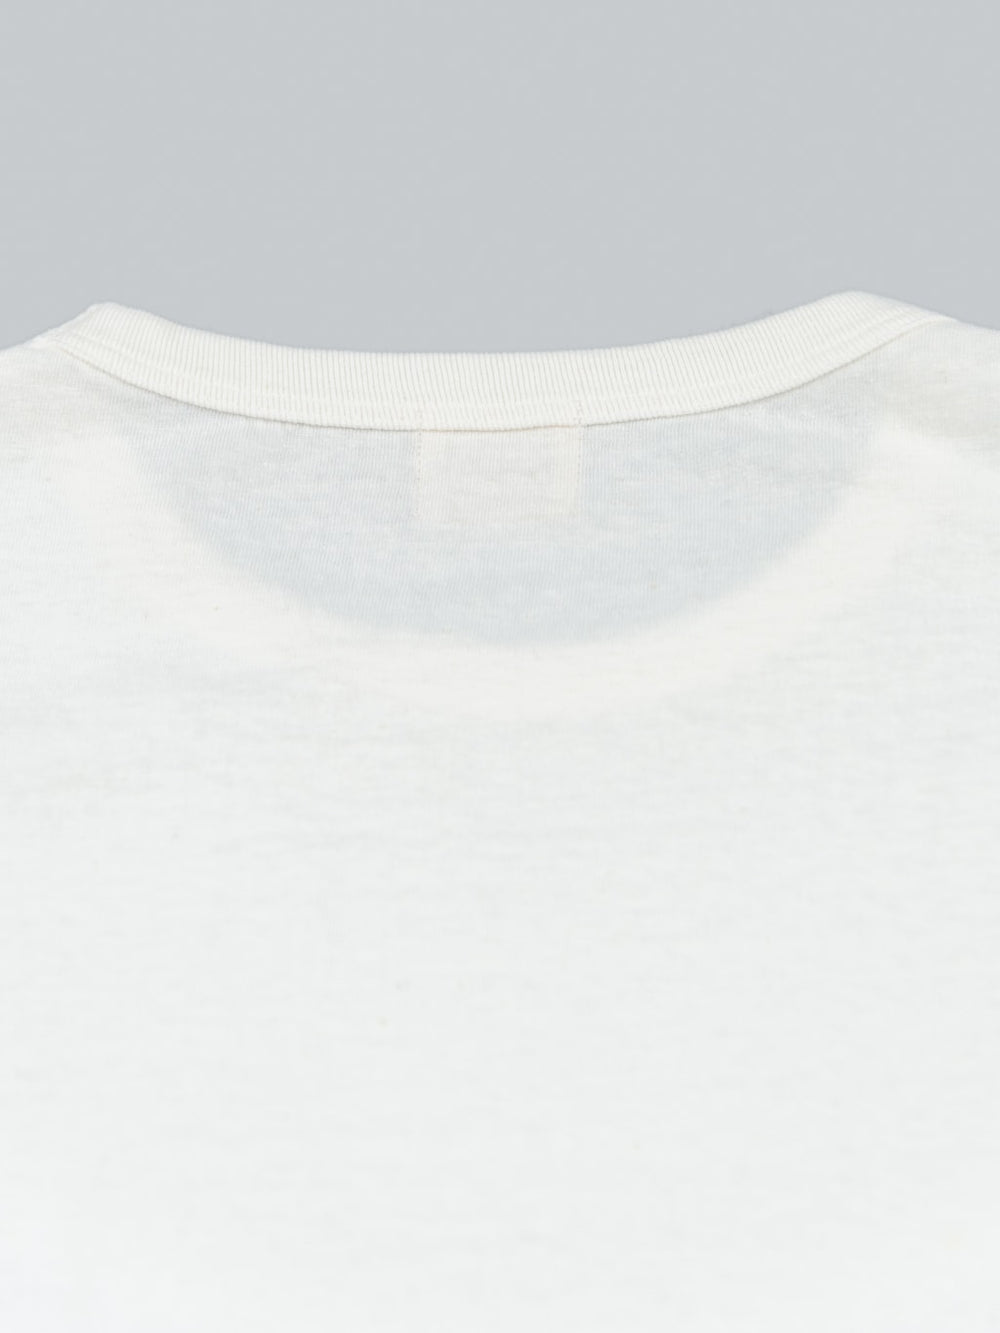 Samurai Jeans SJ2PST-CREW Tubular White T-Shirt (2 Pack)